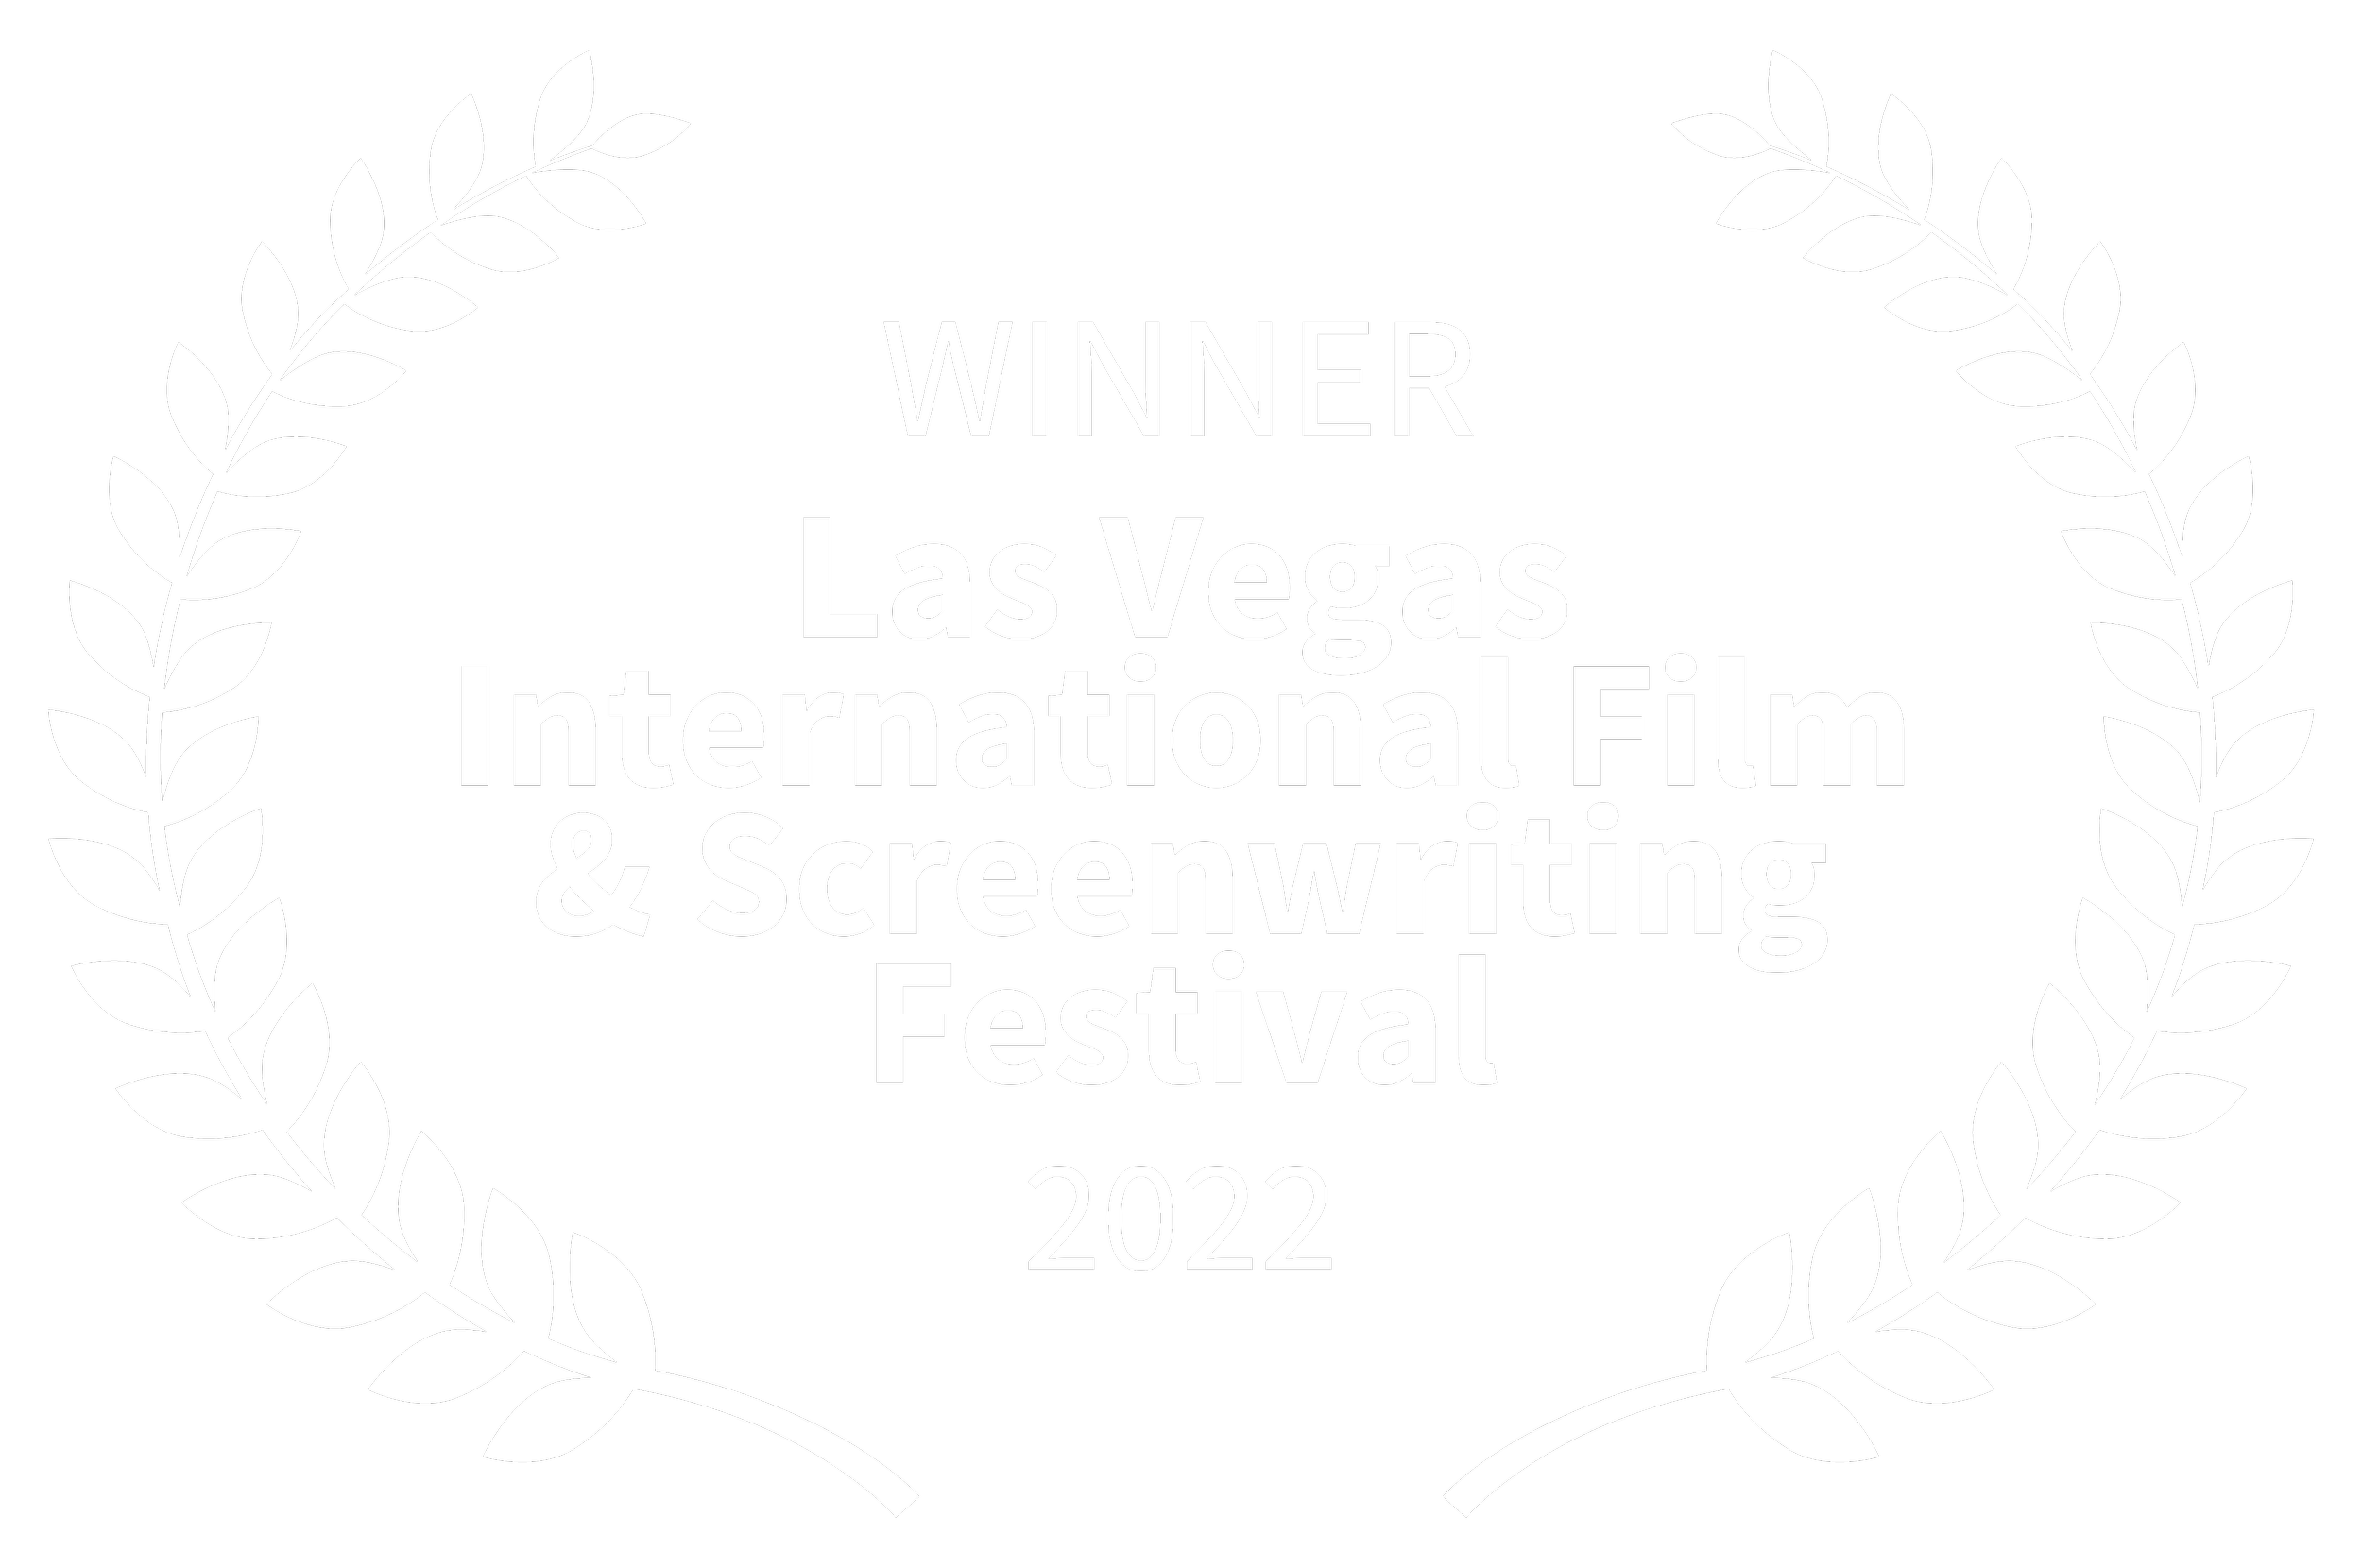 WINNER-LasVegasInternationalFilmScreenwritingFestival-2022.png